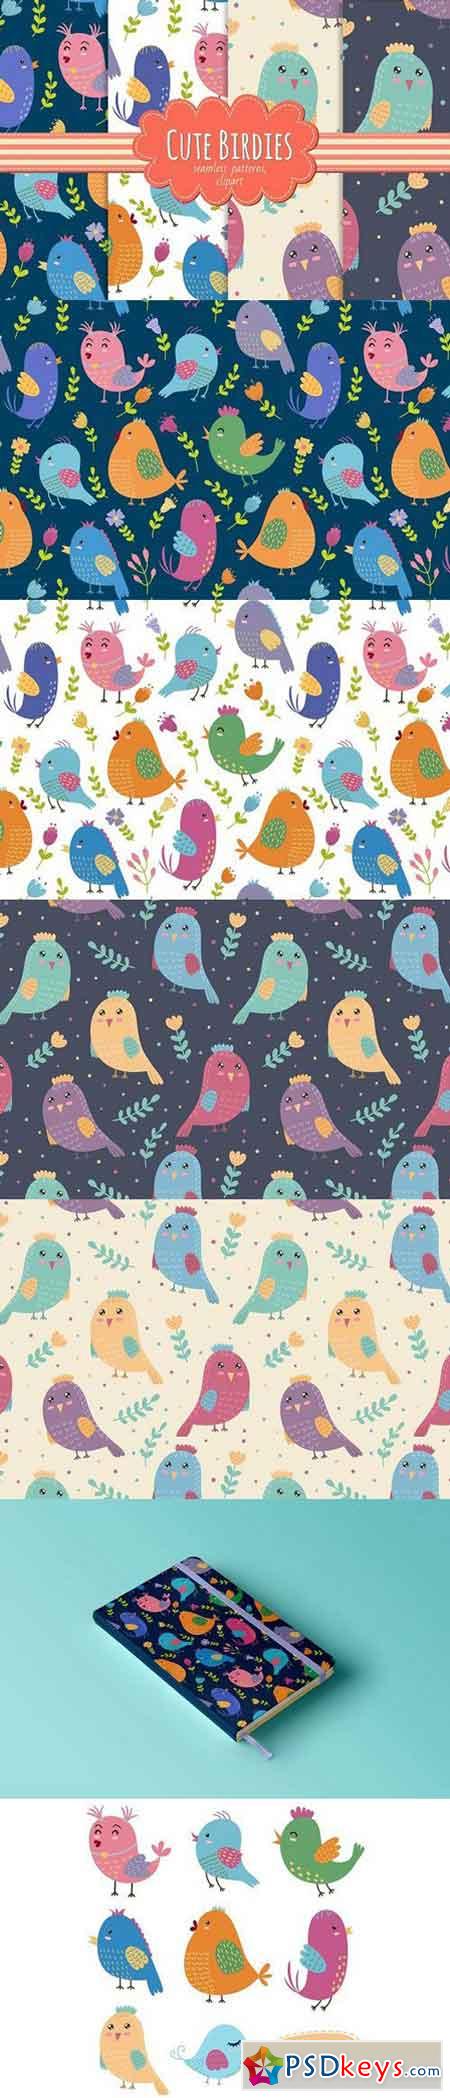 Cute Birdies patterns&clipart 970718